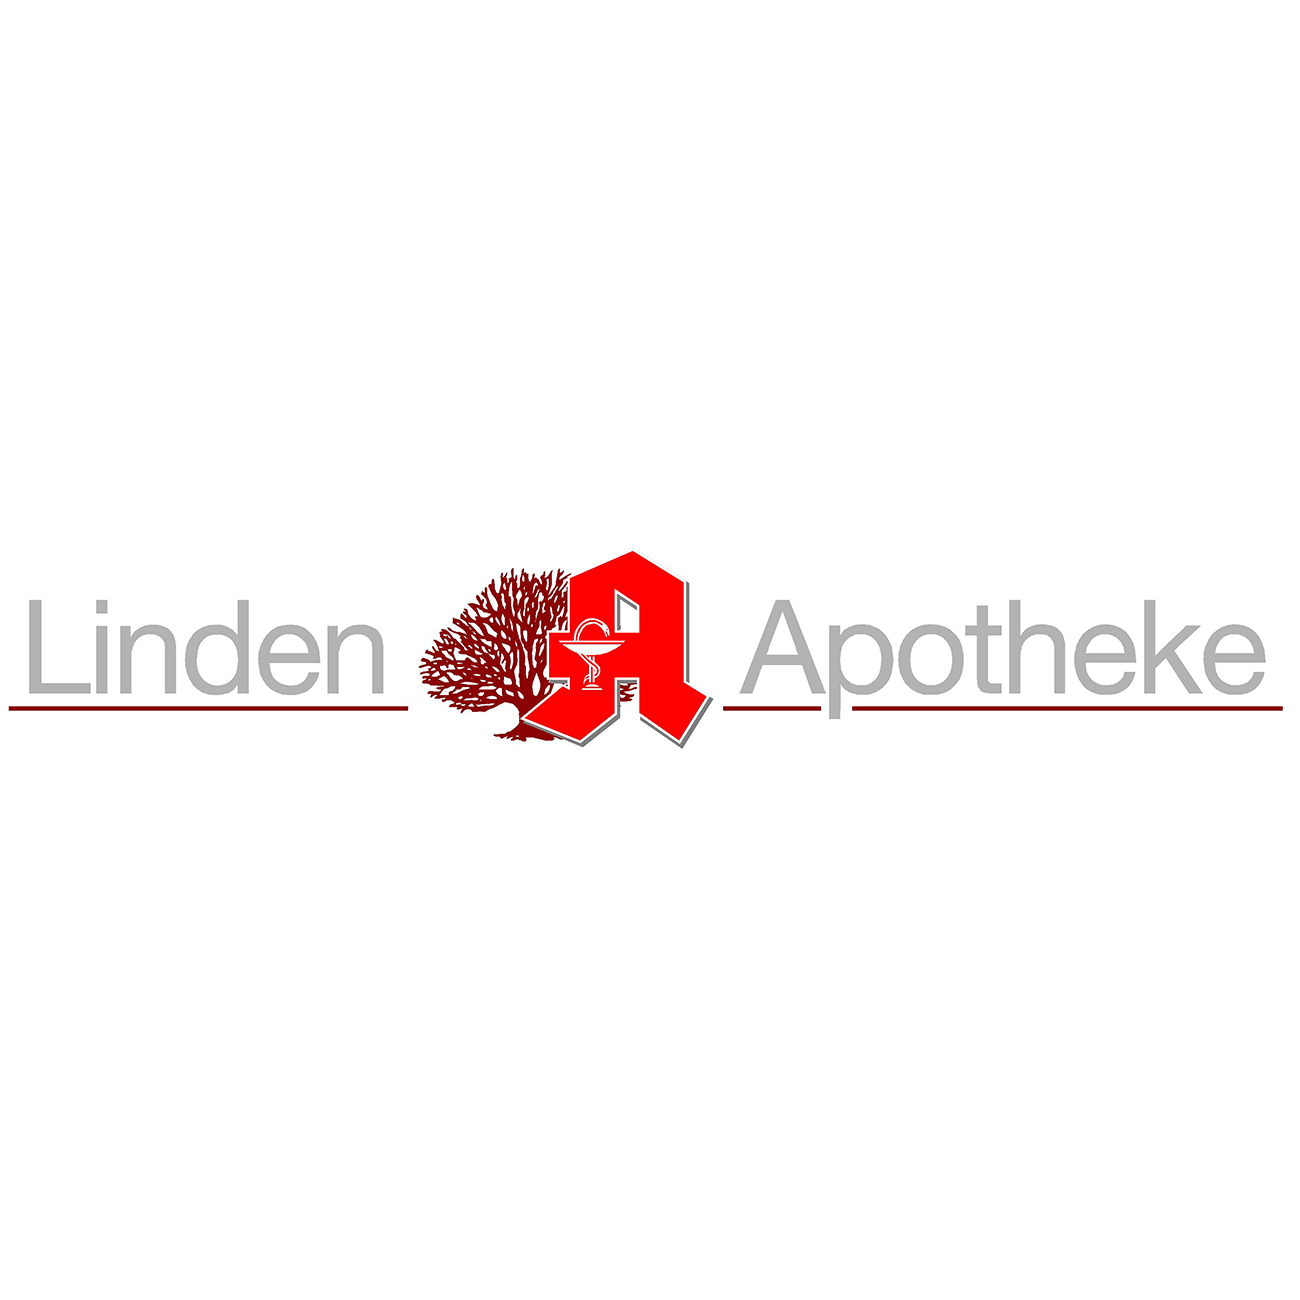 Linden-Apotheke in Völklingen - Logo